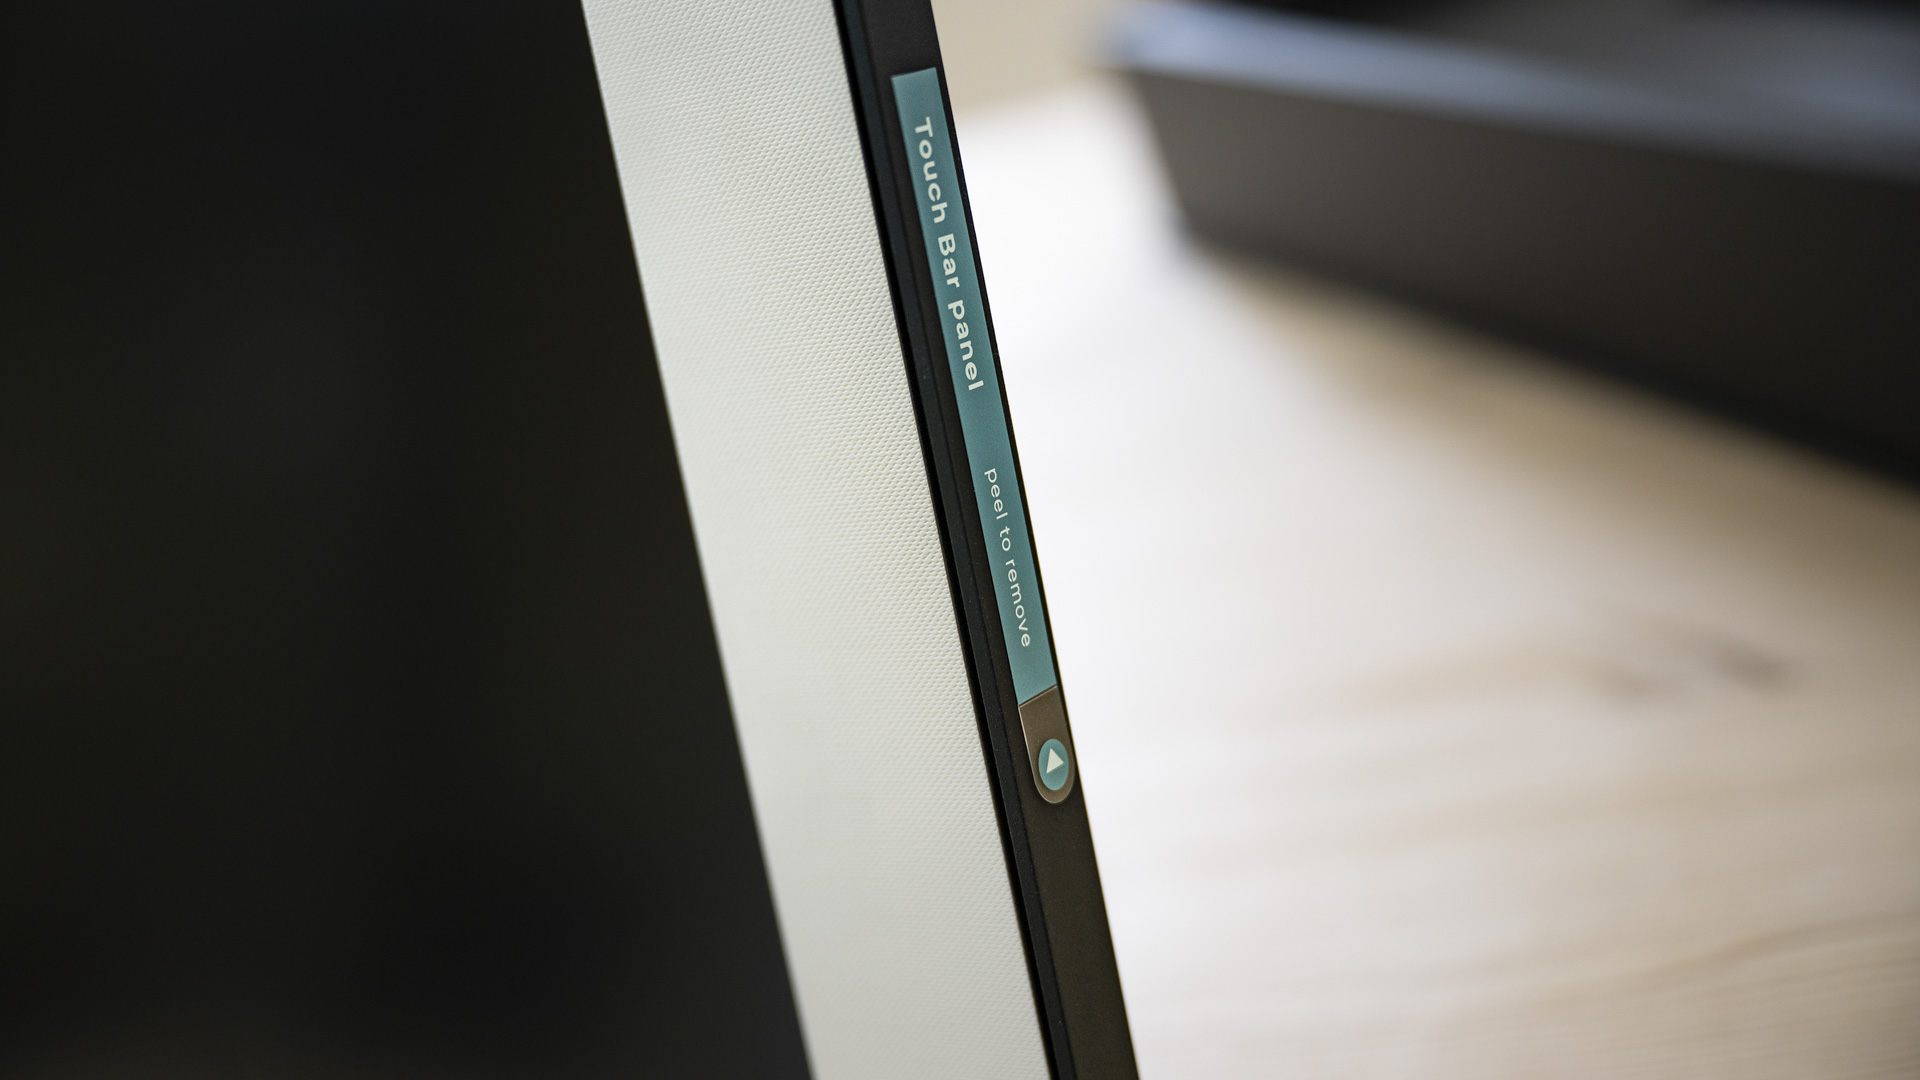 Touch bar panel of the Aura Walden digital photo frame